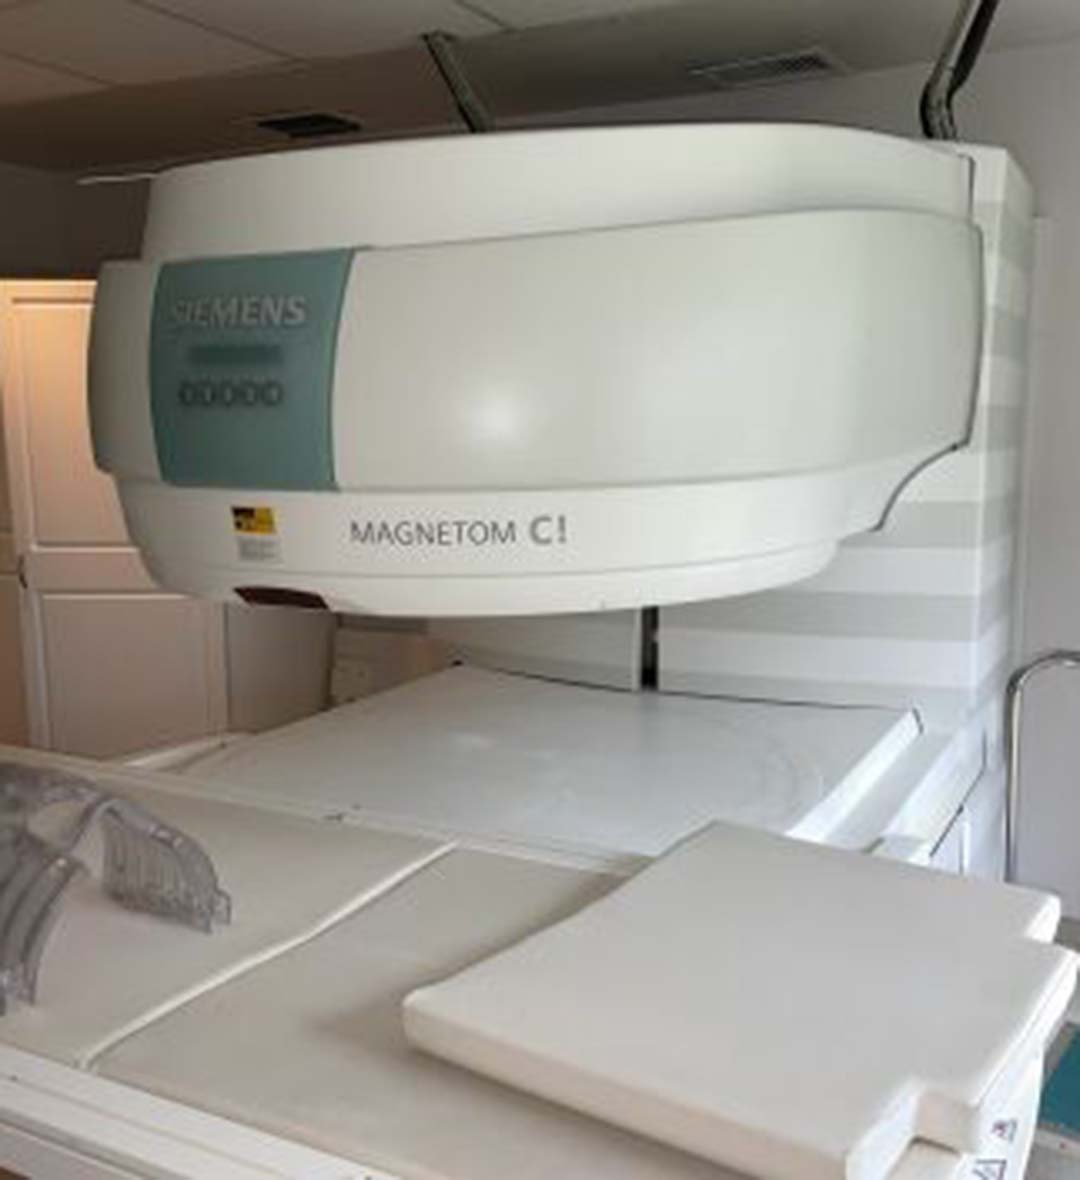 Siemens Magnetom C! 0.35T MRI